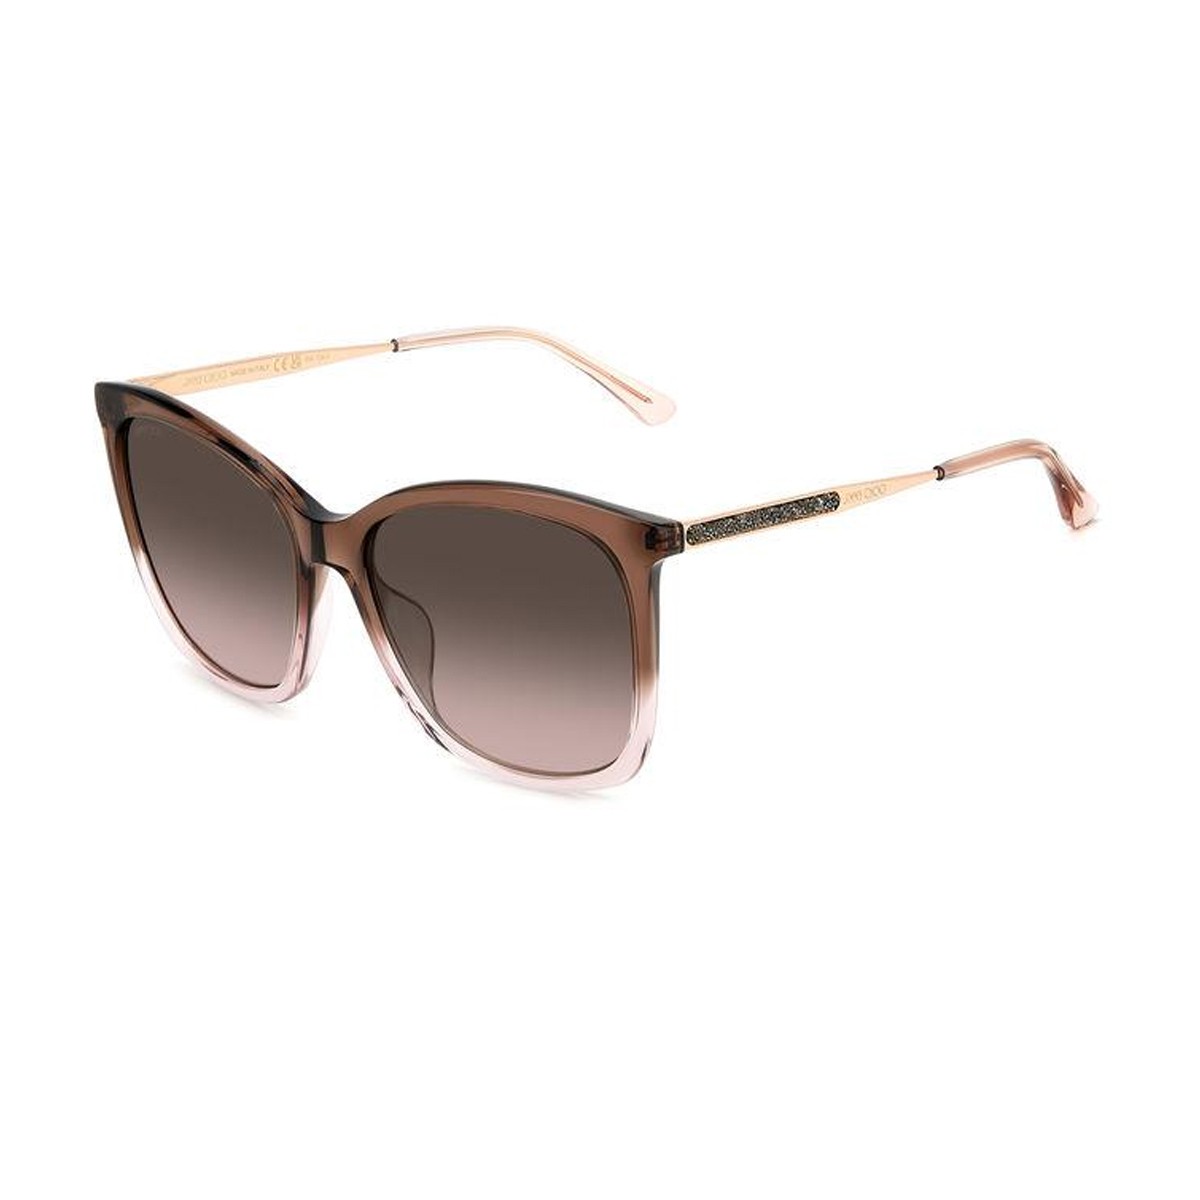 Jimmy Choo - Triny - Brown Shaded Polarized Aviator Sunglasses with Gold  Metal Frame - Jimmy Choo Eyewear - Avvenice